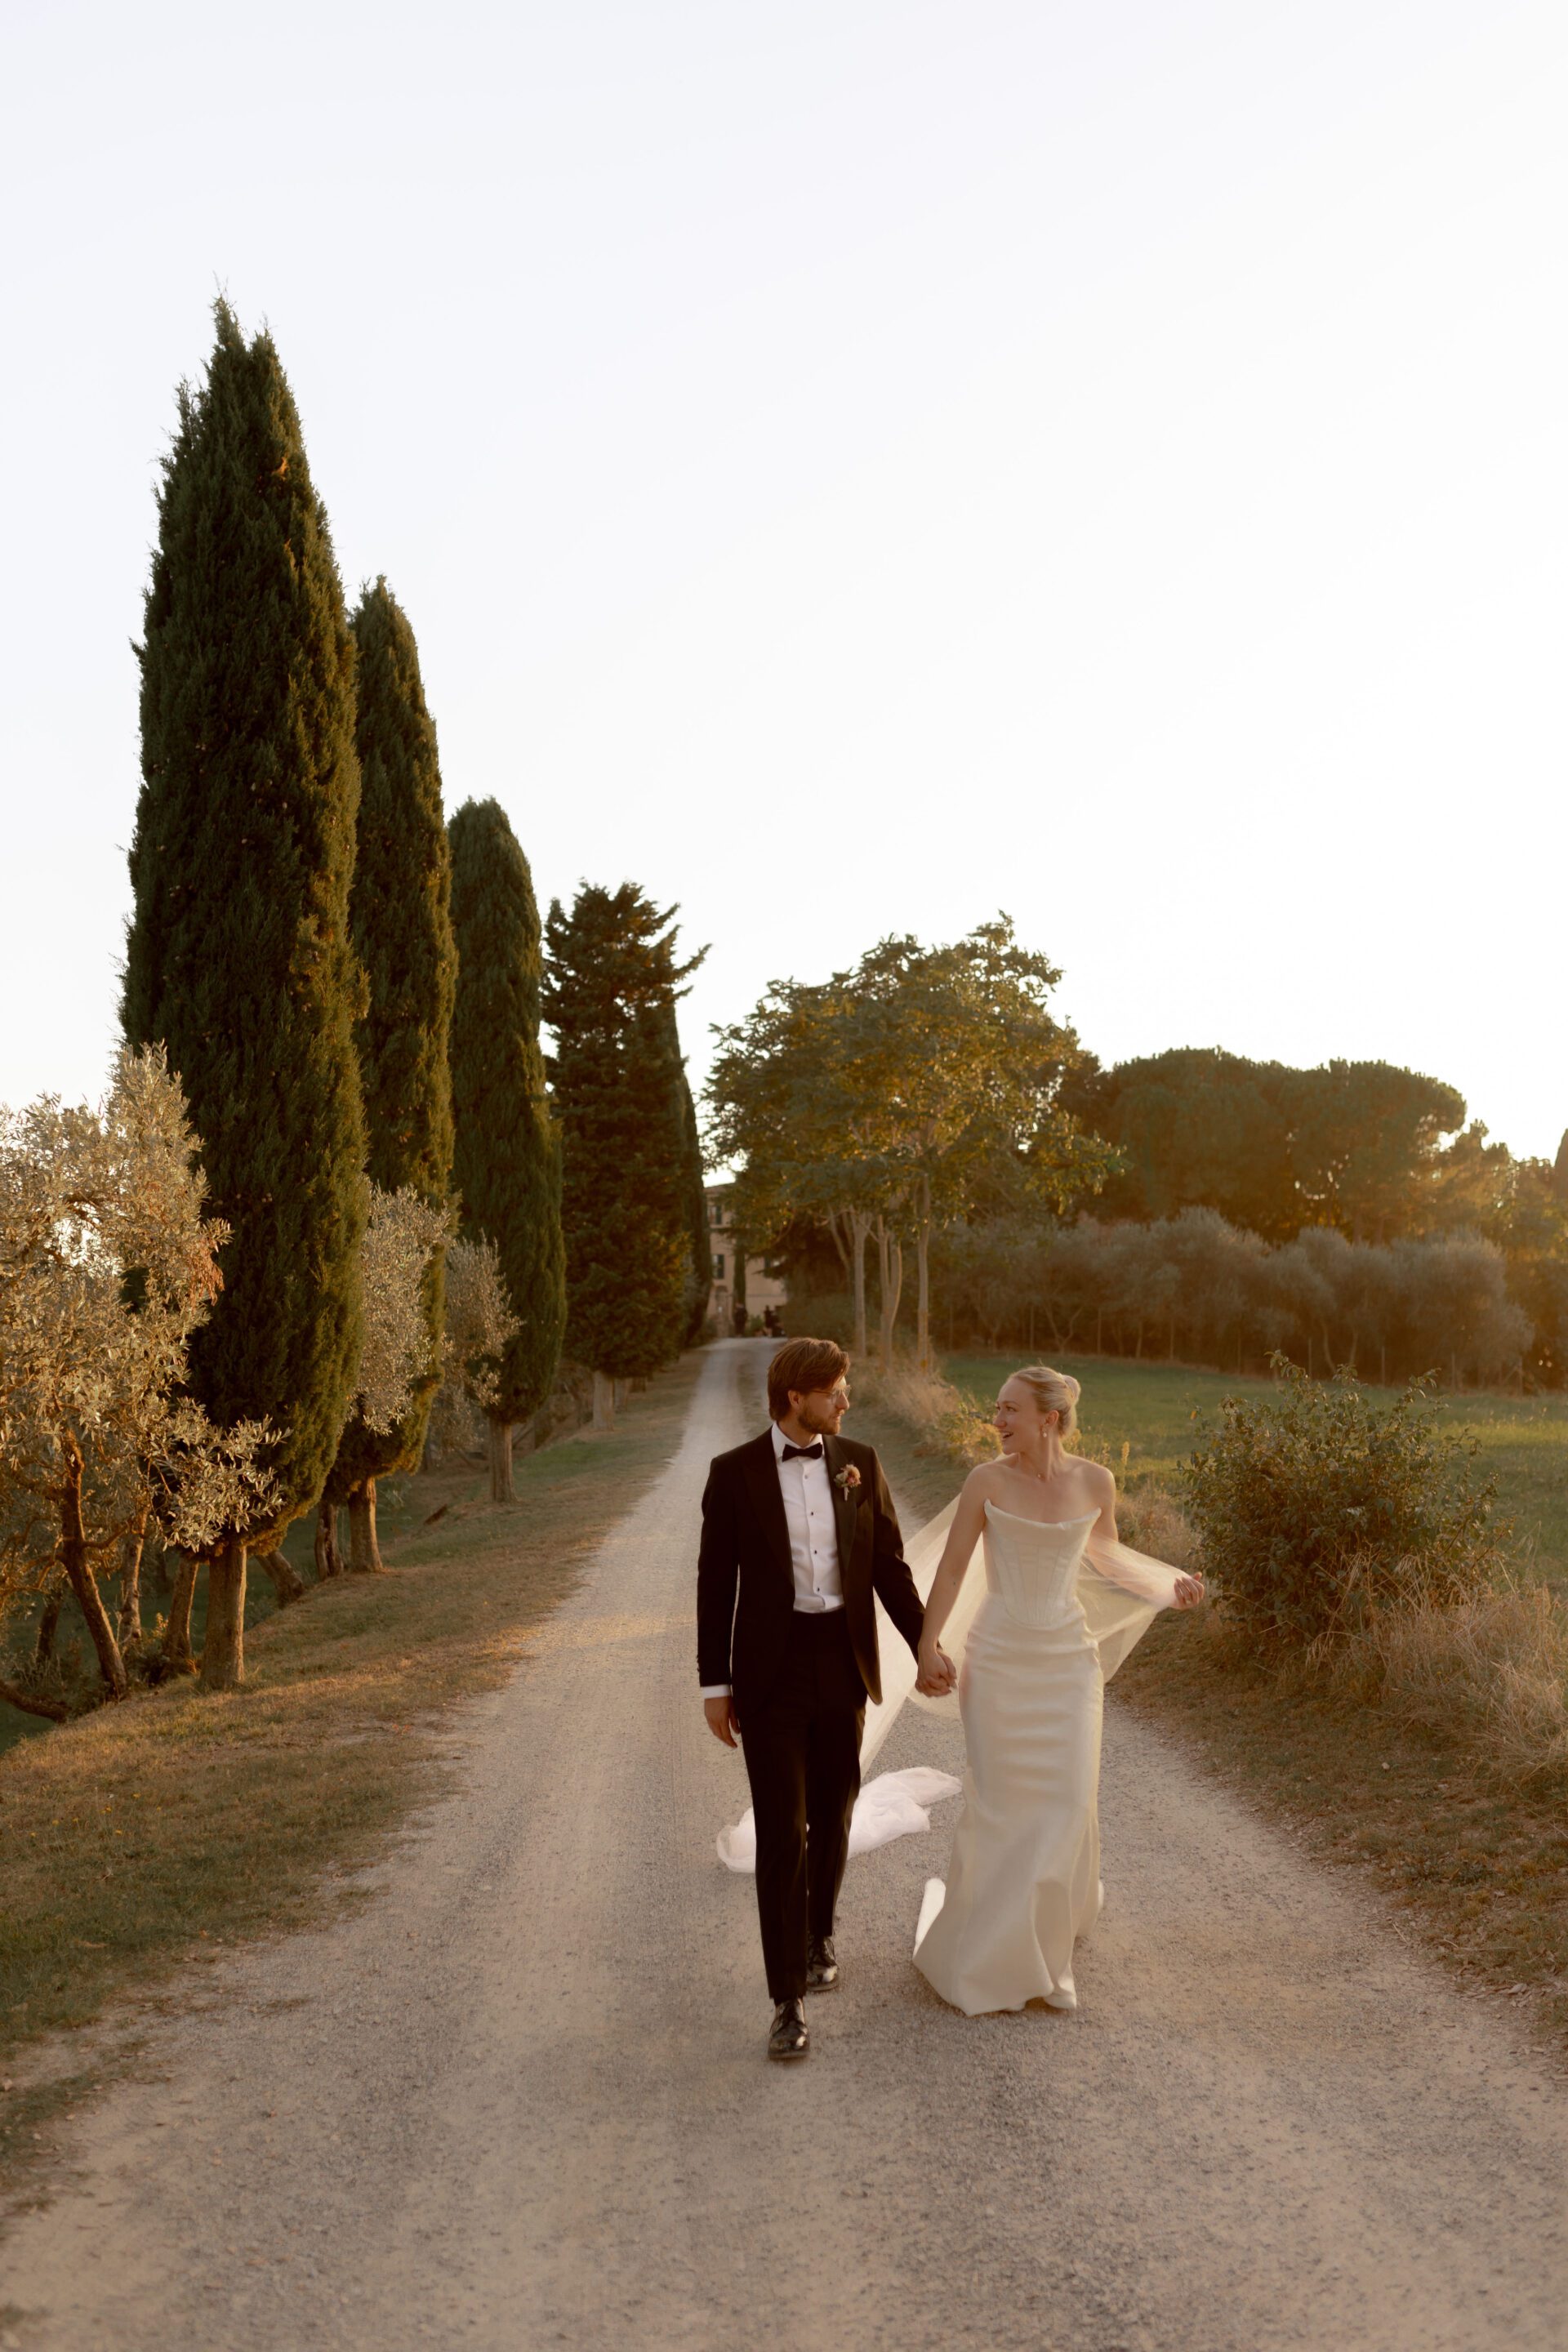 Destination wedding photographer captures couple portraits during golden hour at Italian wedding